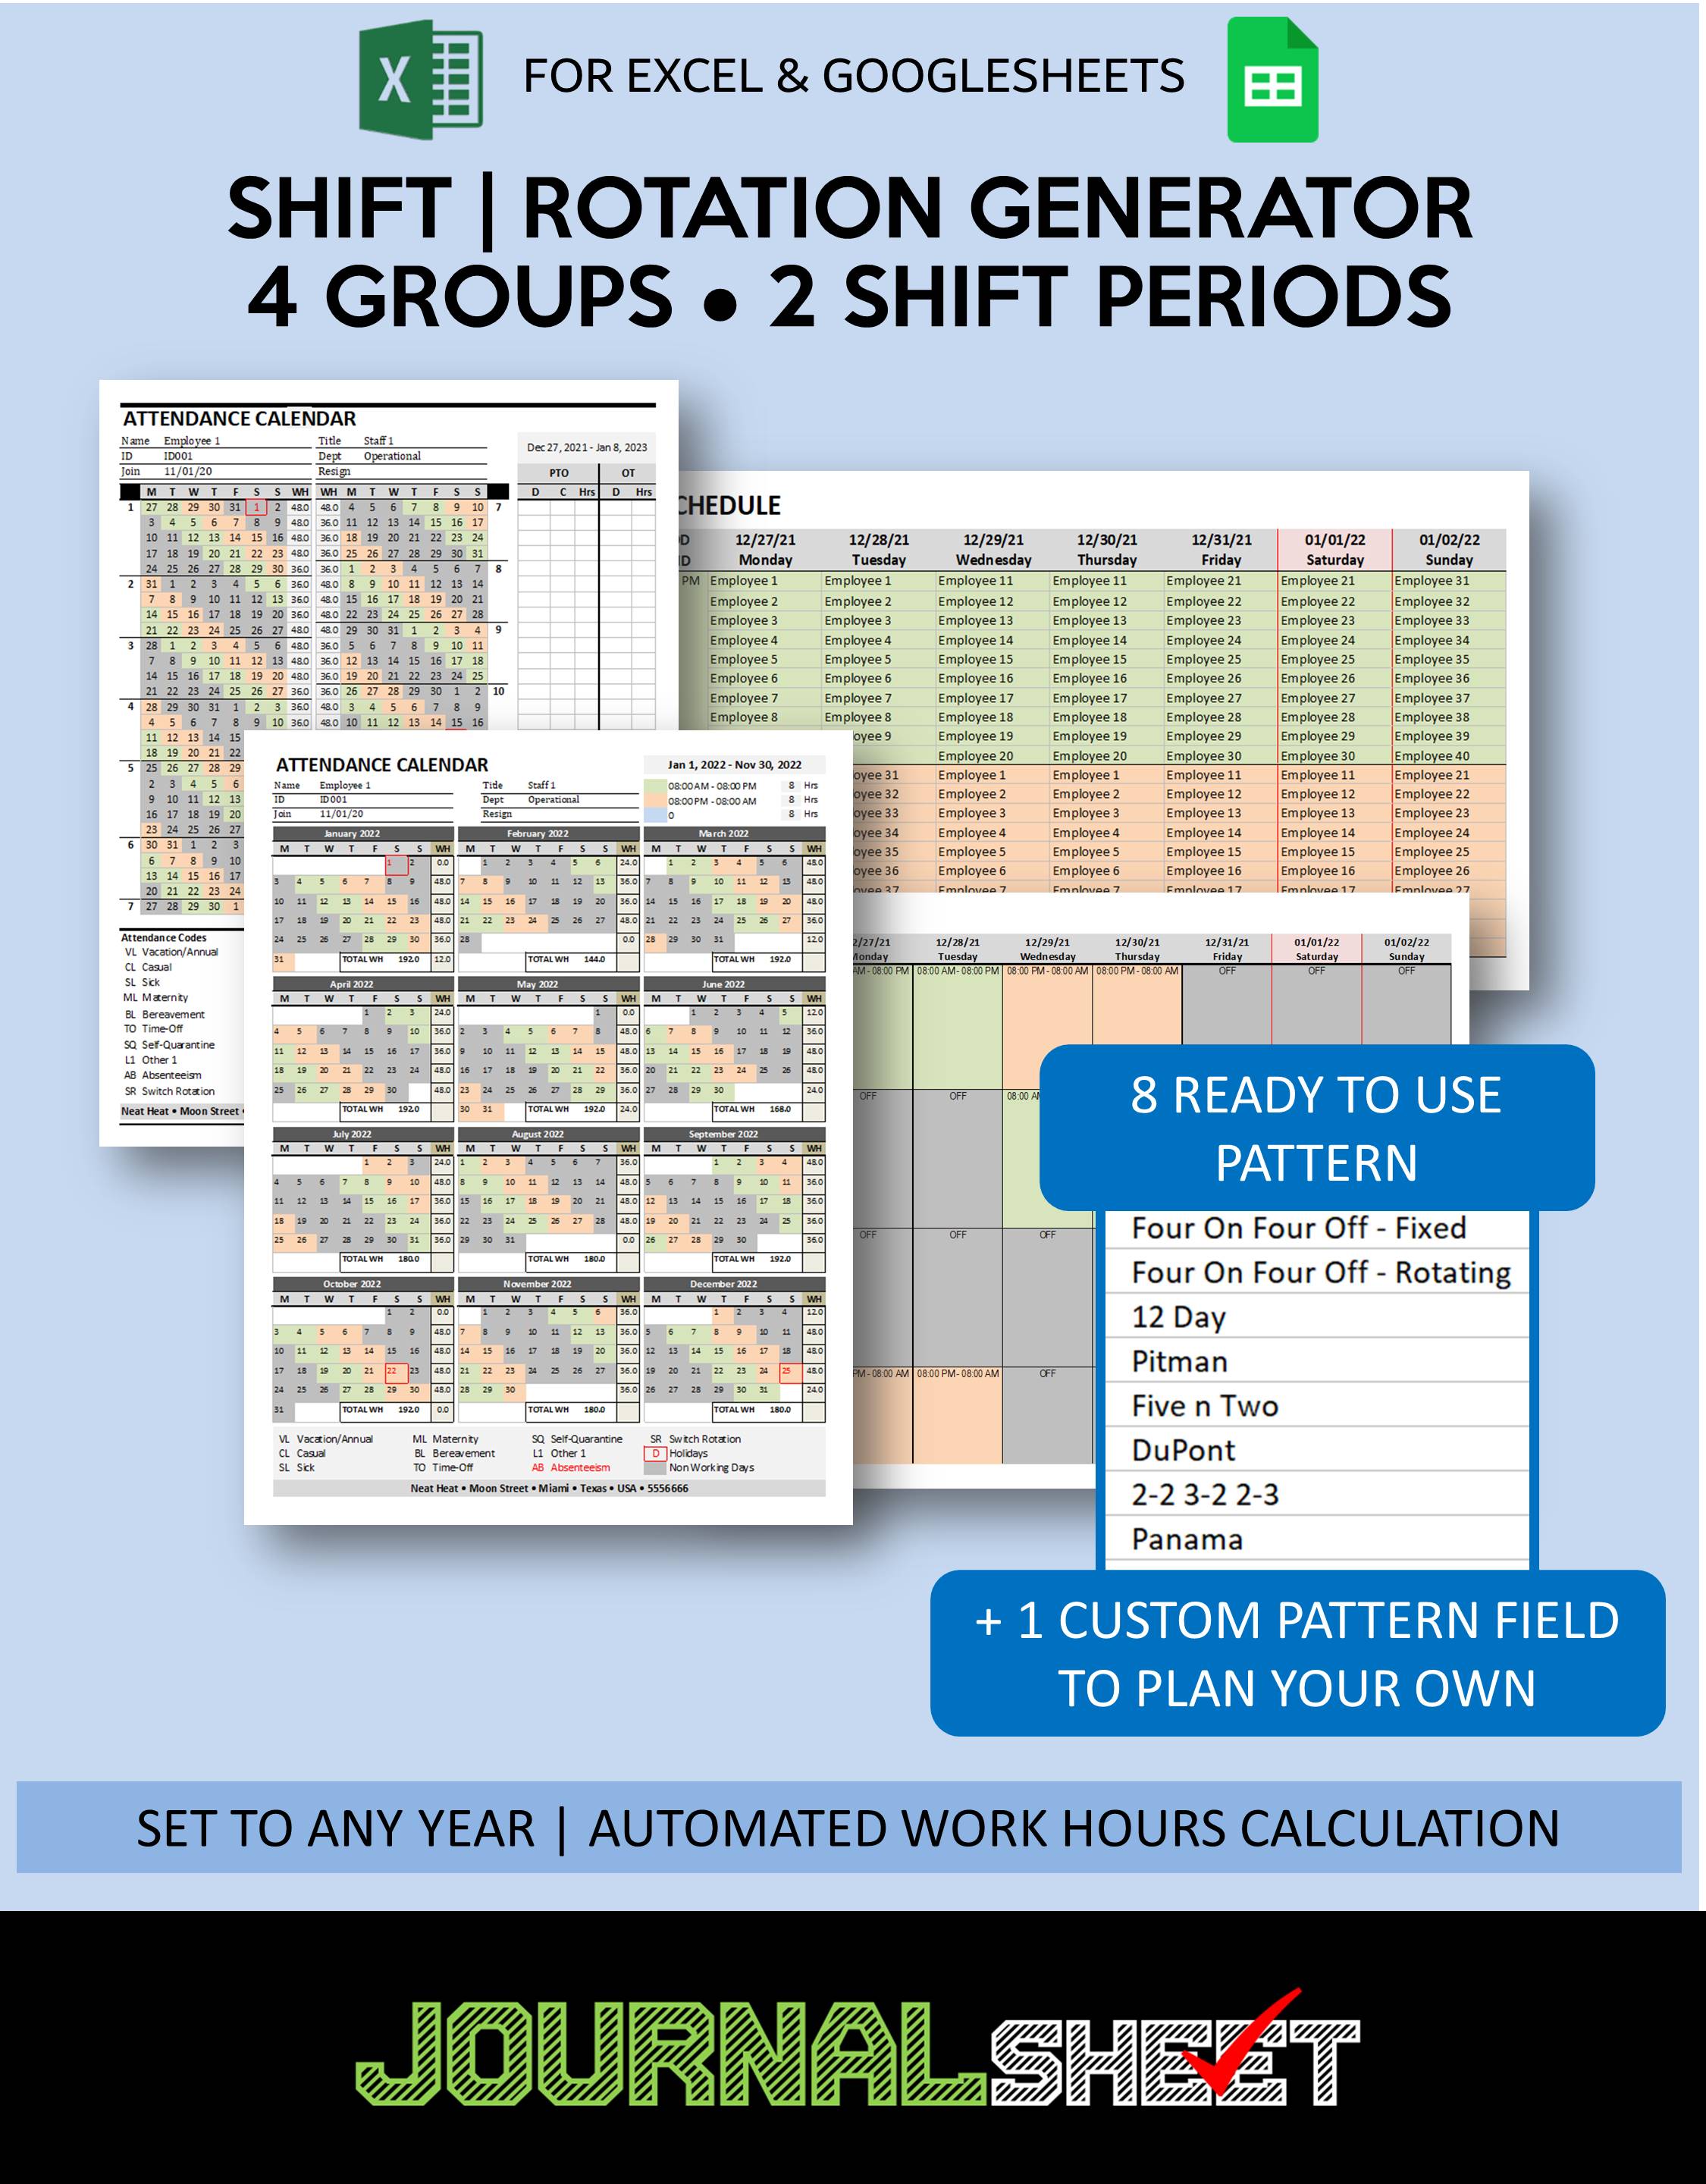 Shift Schedule Generator - 4 Groups 2 Shifts